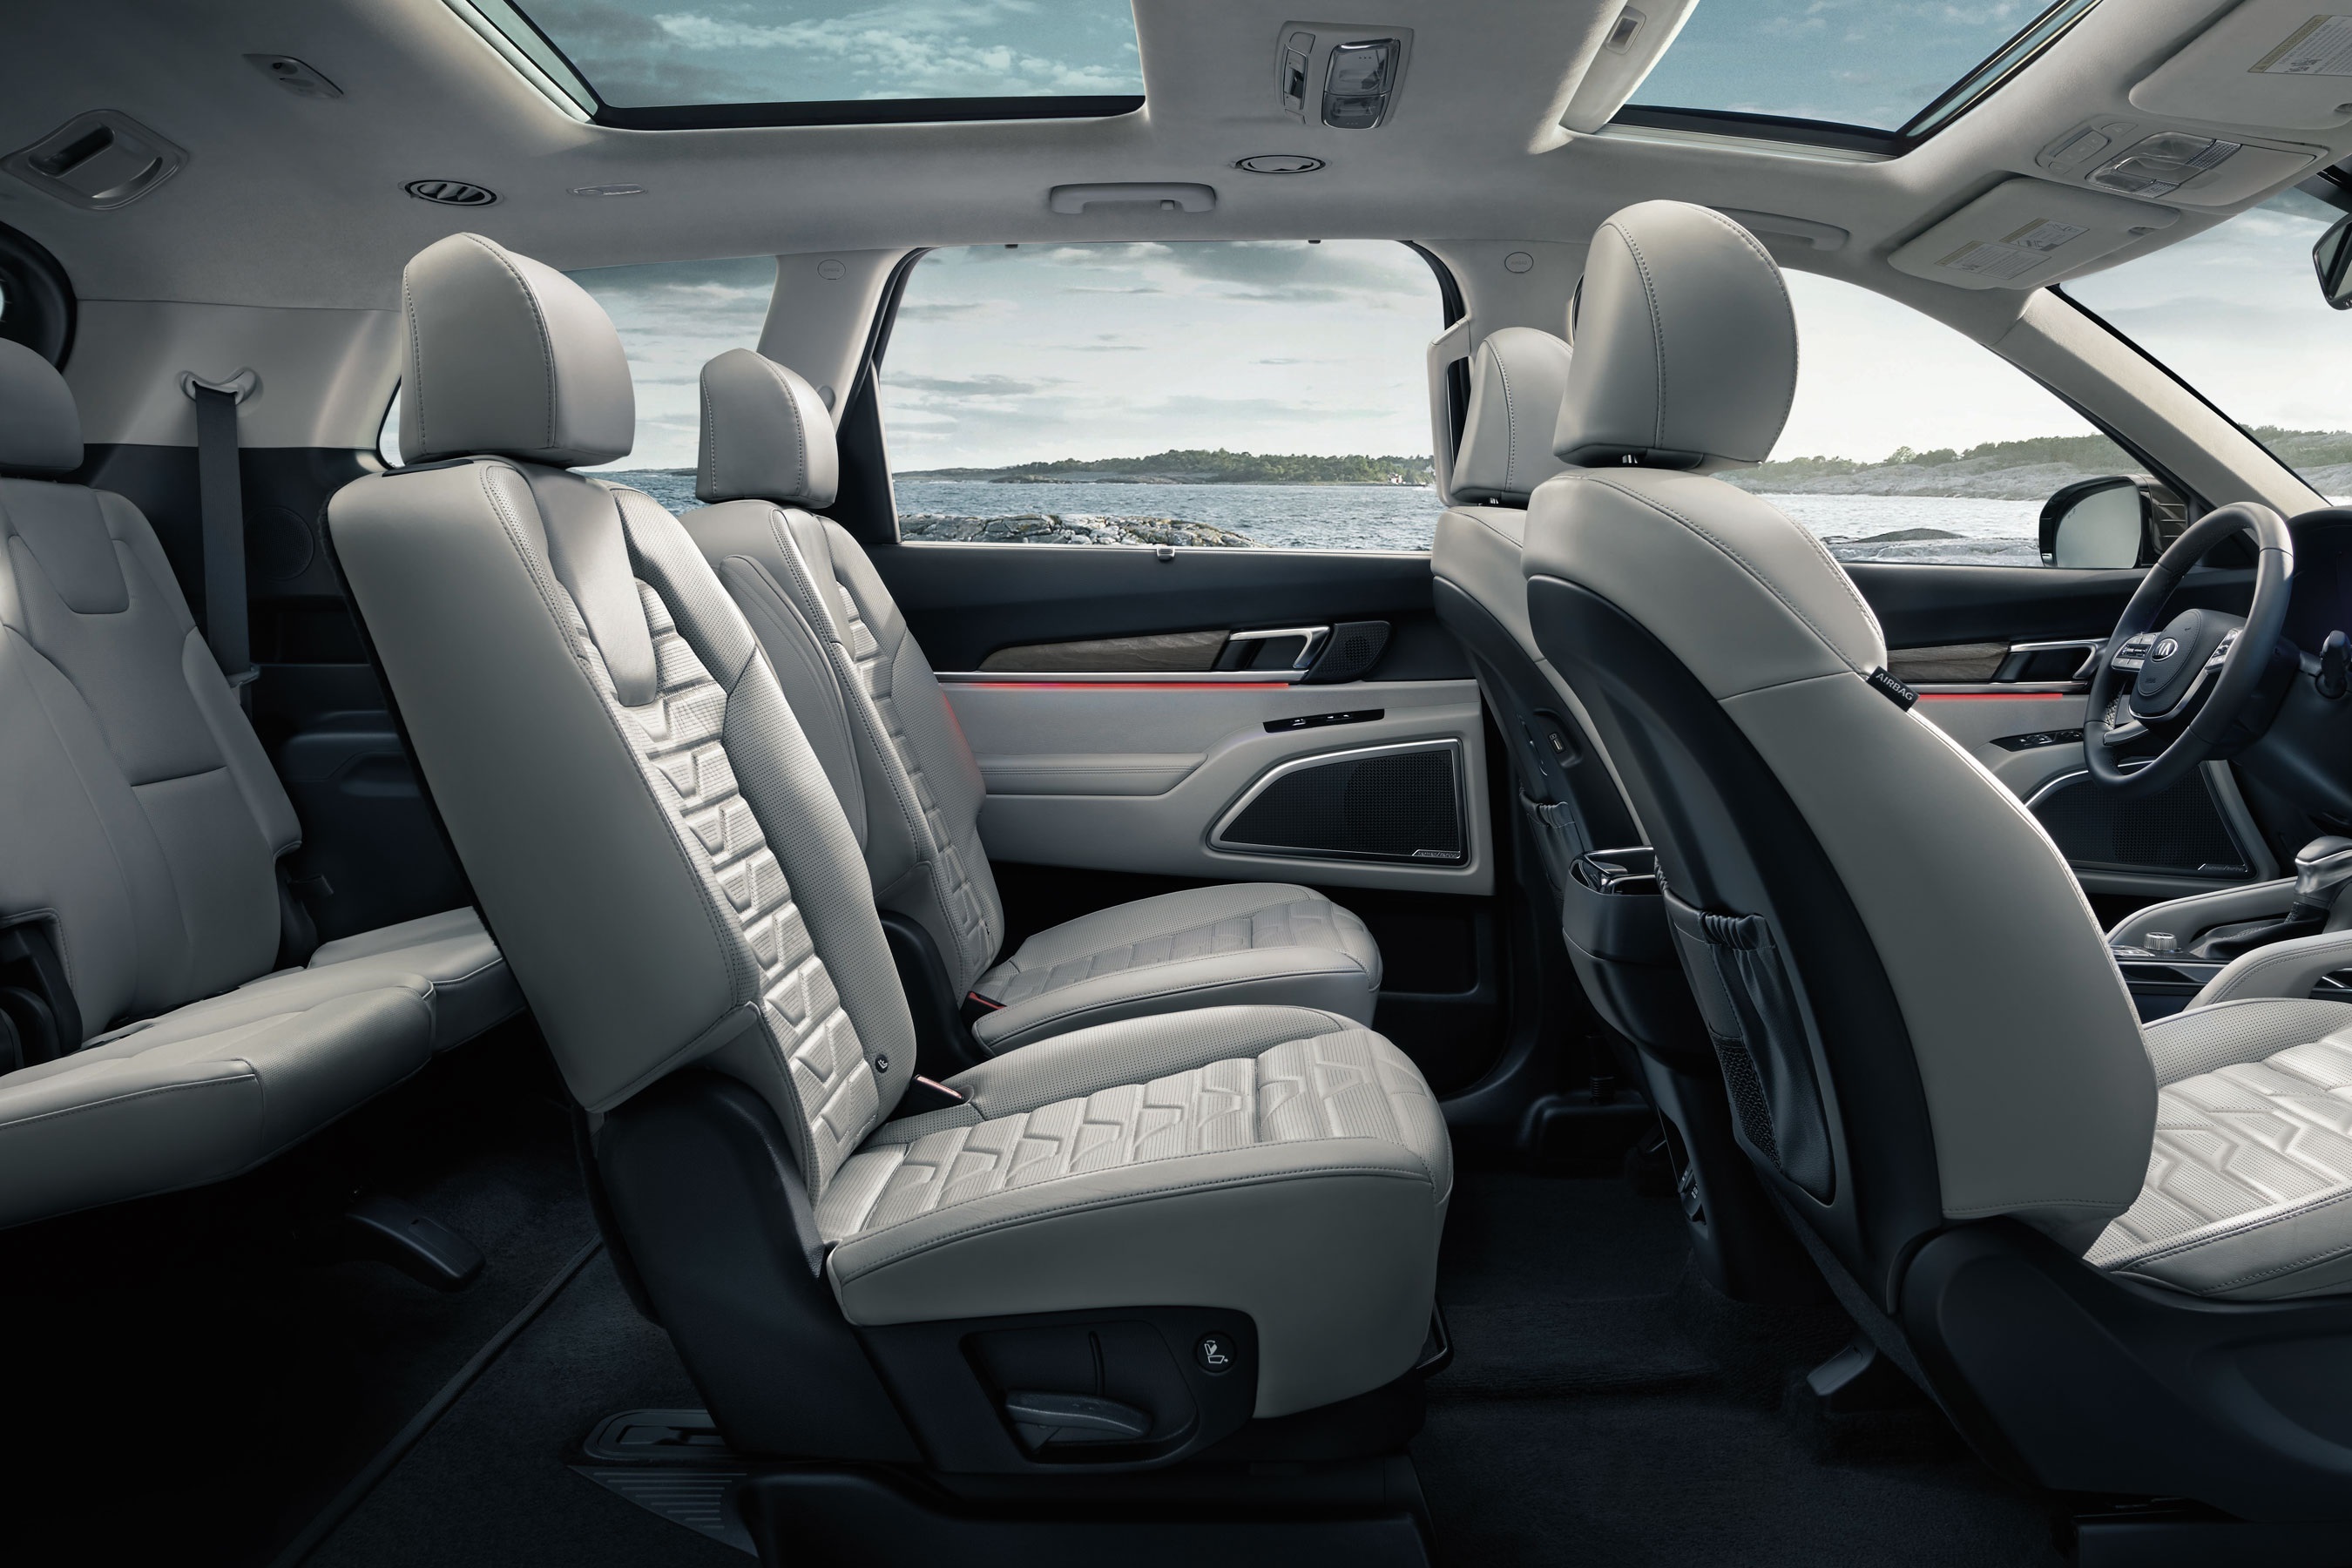 2020 Kia Telluride Third Row Luxury Suv Specs Features